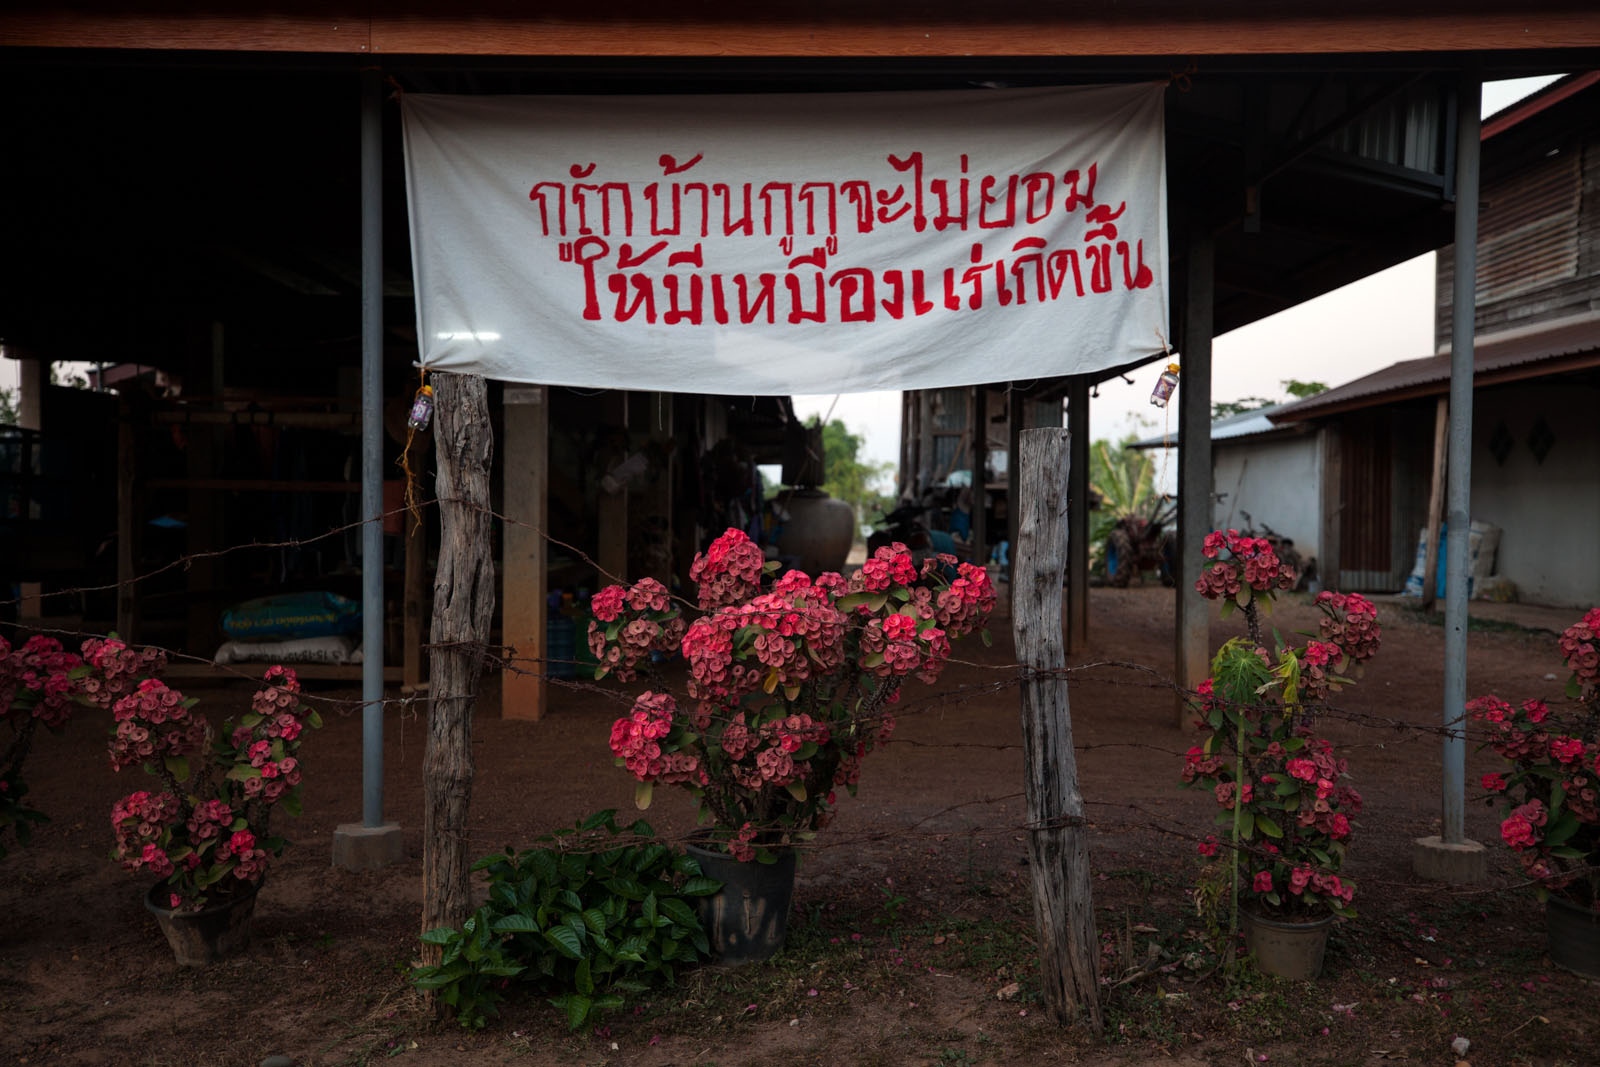 WHAT LIES BELOW SHOULD STAY BELOW - A anti-mining sign written in Thai reads "We love...